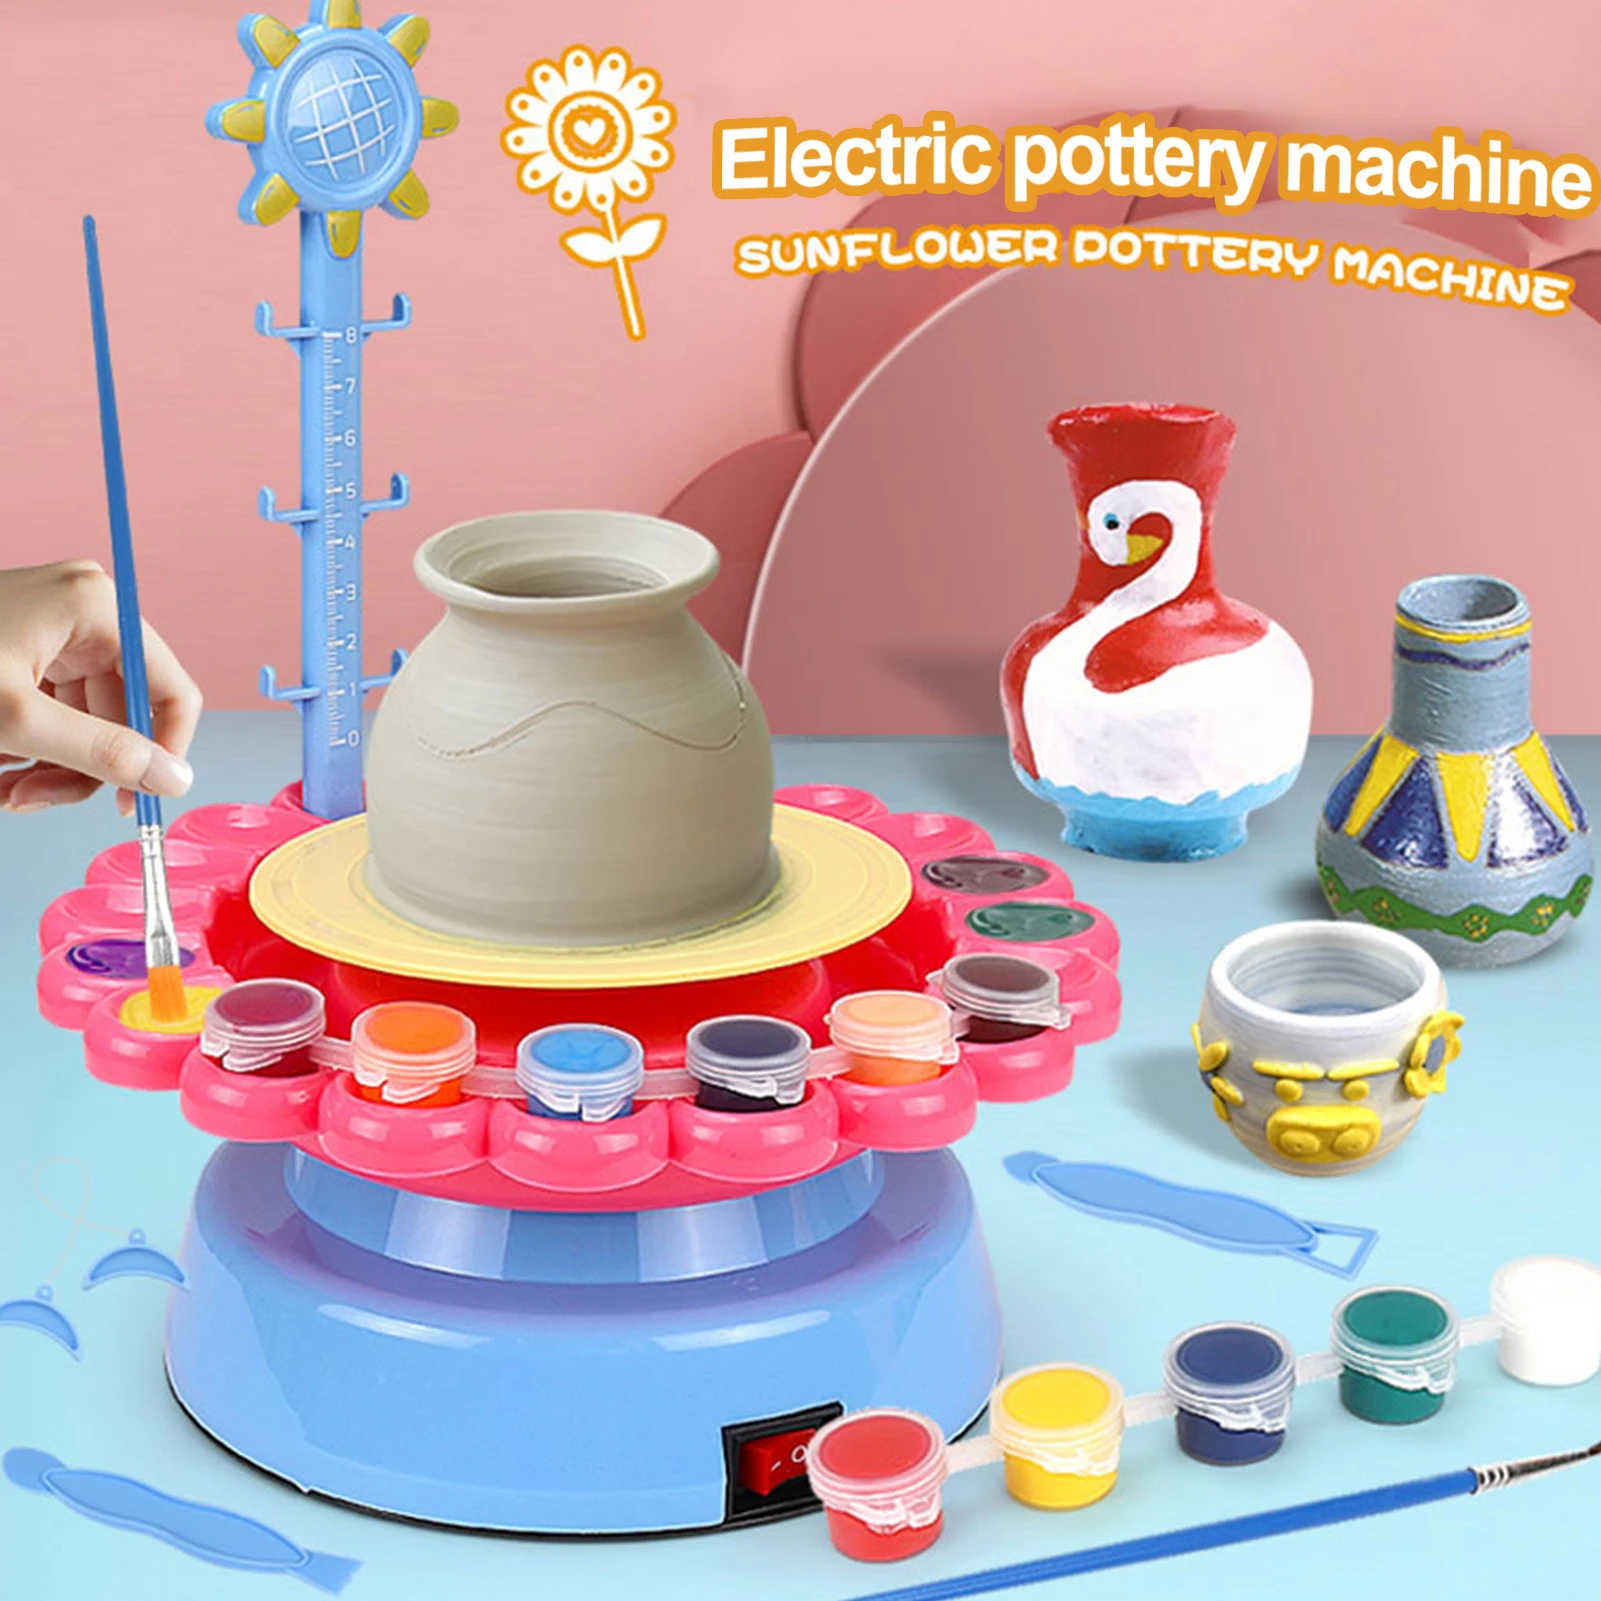 USB-Electric-Pottery-Wheel-Machine-Mini-Pottery-Making-Machine-DIY-Craft-Ceramic-Clay-Pottery-Kit-With.jpg_Q90.jpg_.webp